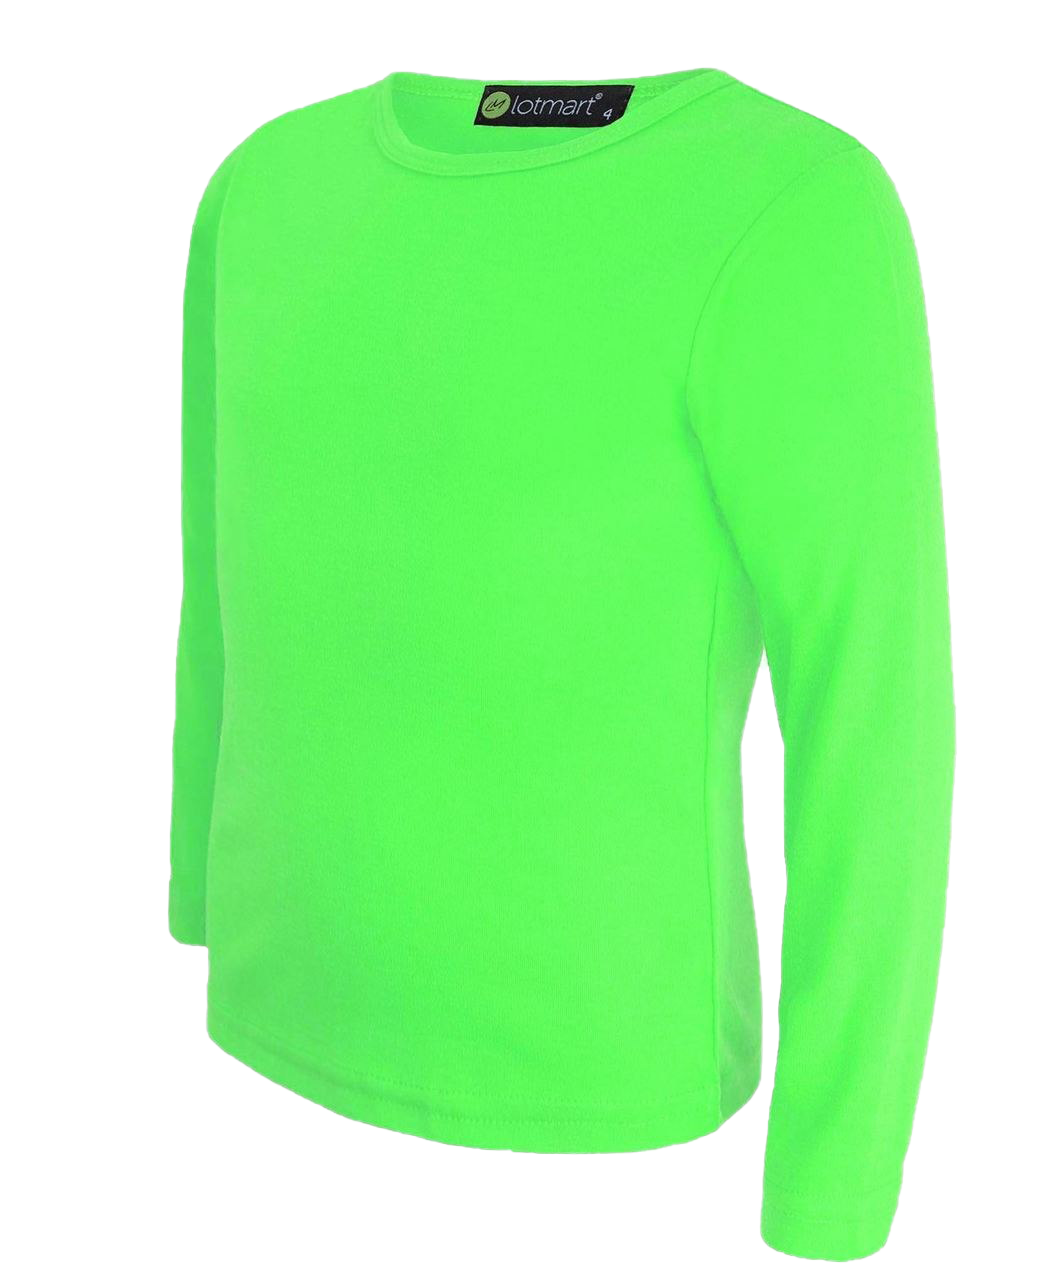 Plain Green T-Shirt PNG Photo